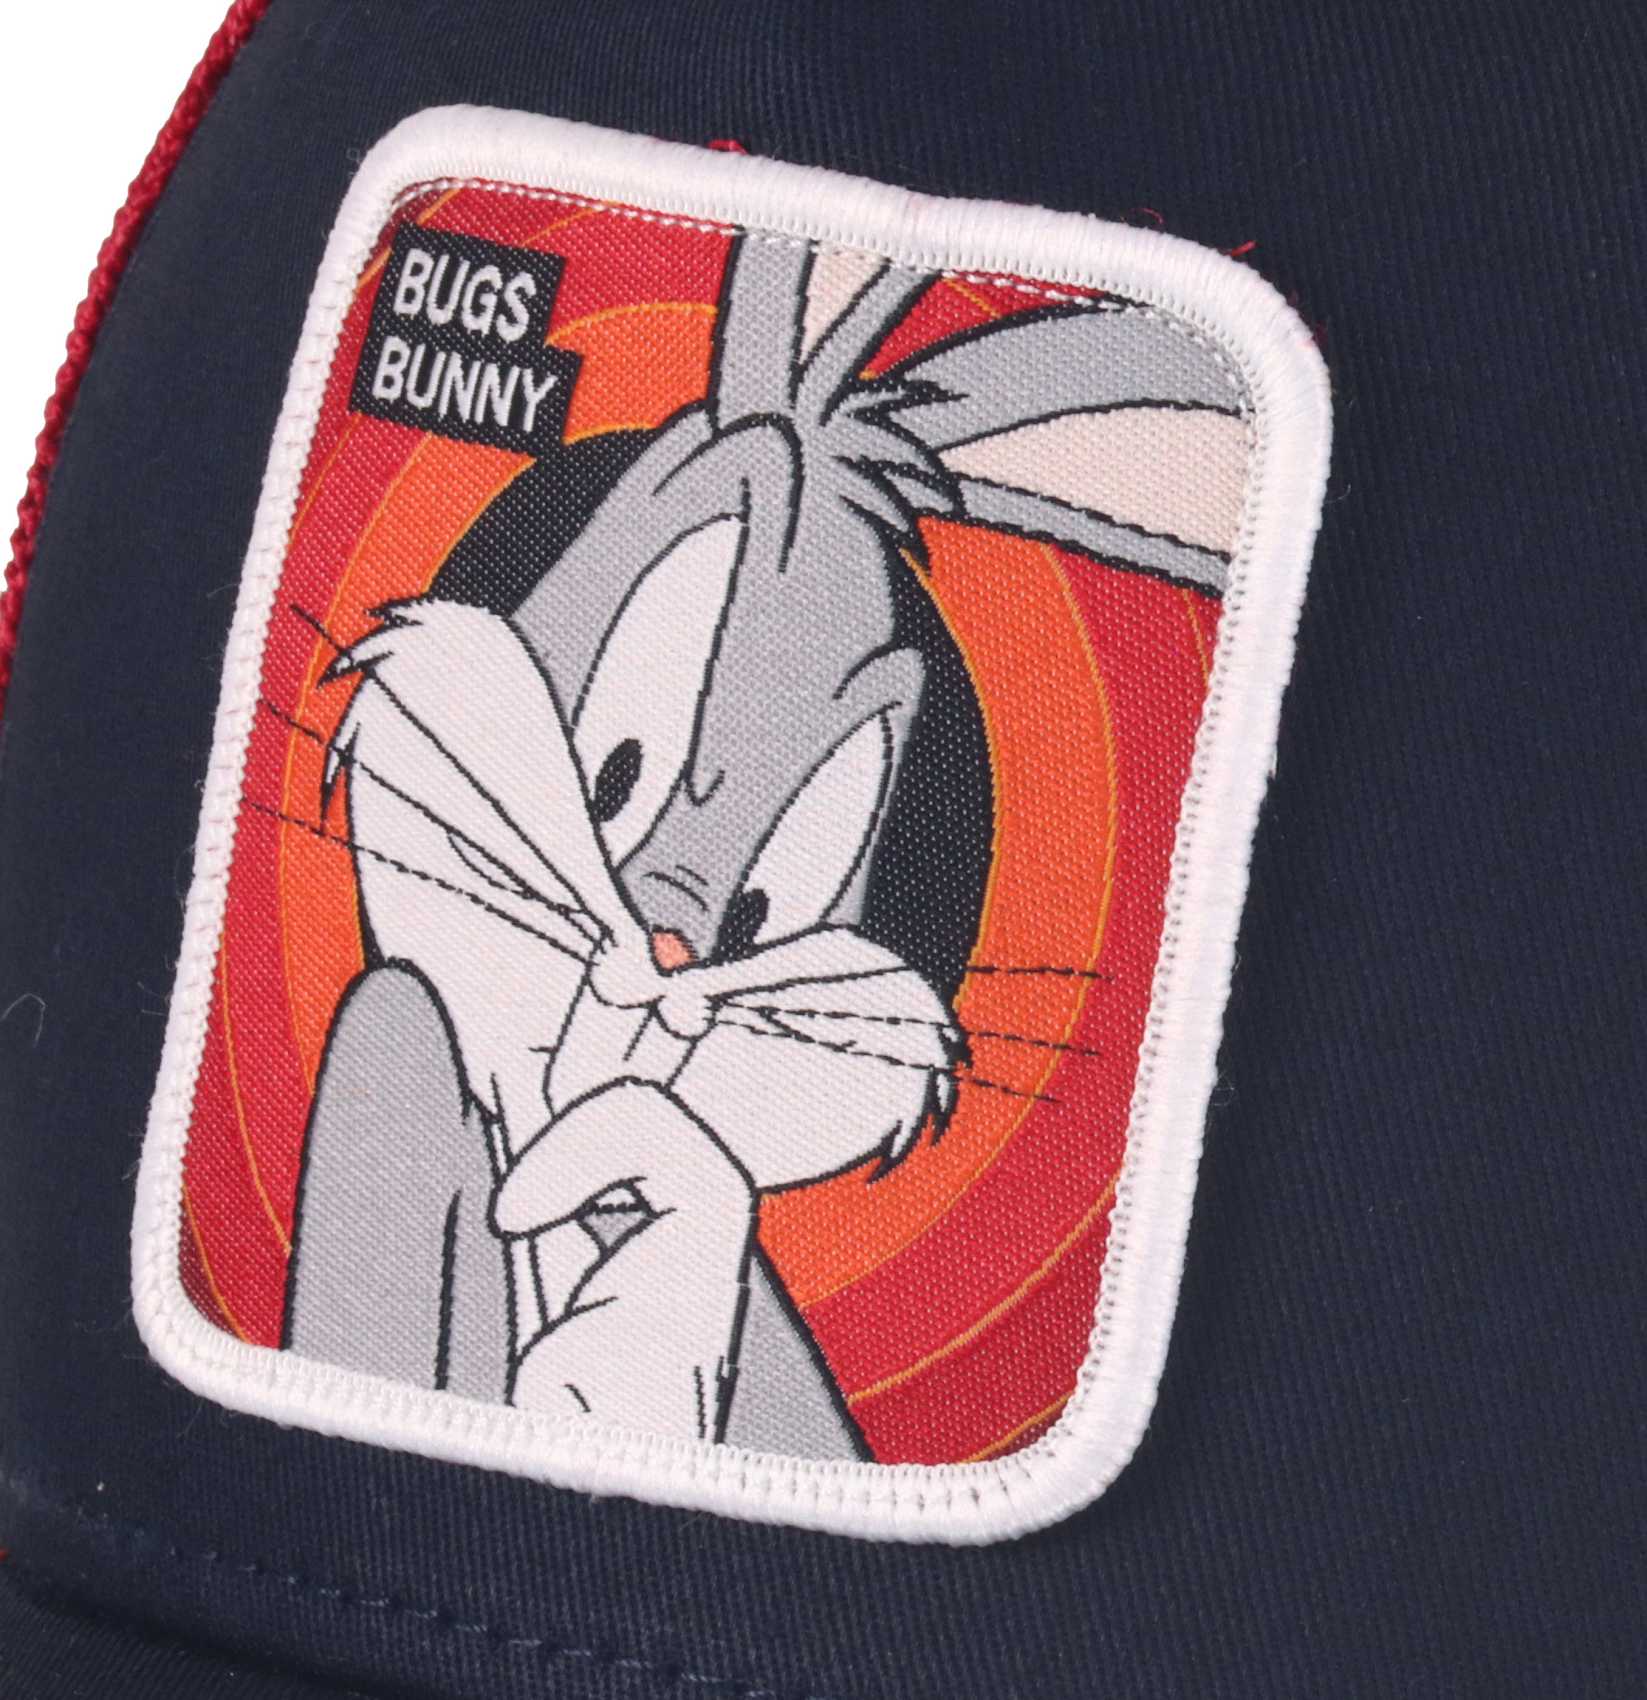 Bugs Bunny Looney Tunes Trucker Cap Capslab